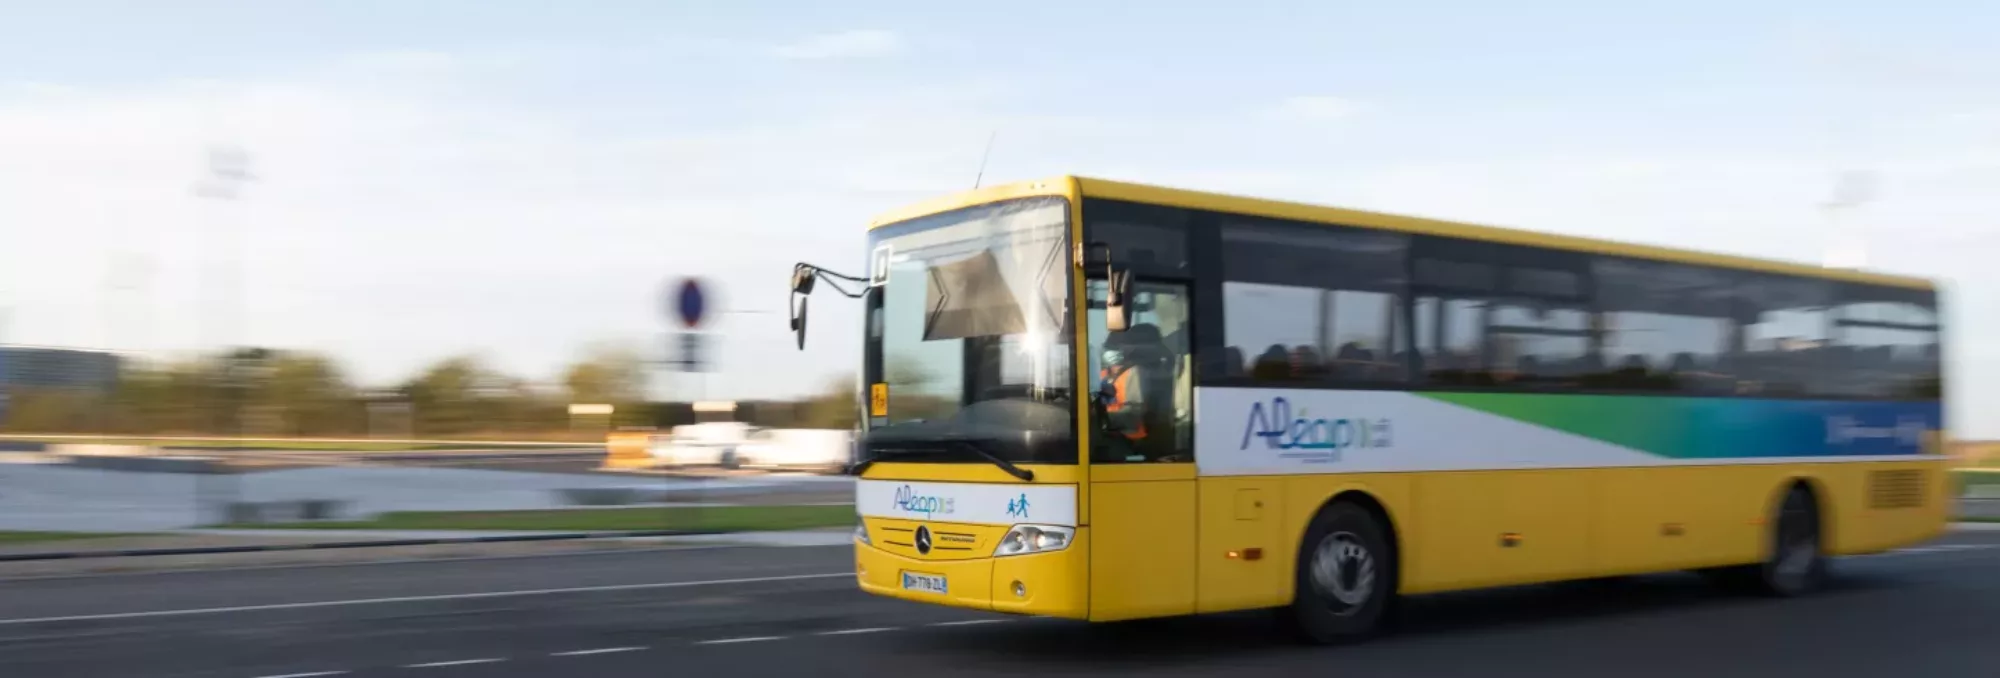 Bus de transport scolaire jaune Aléop